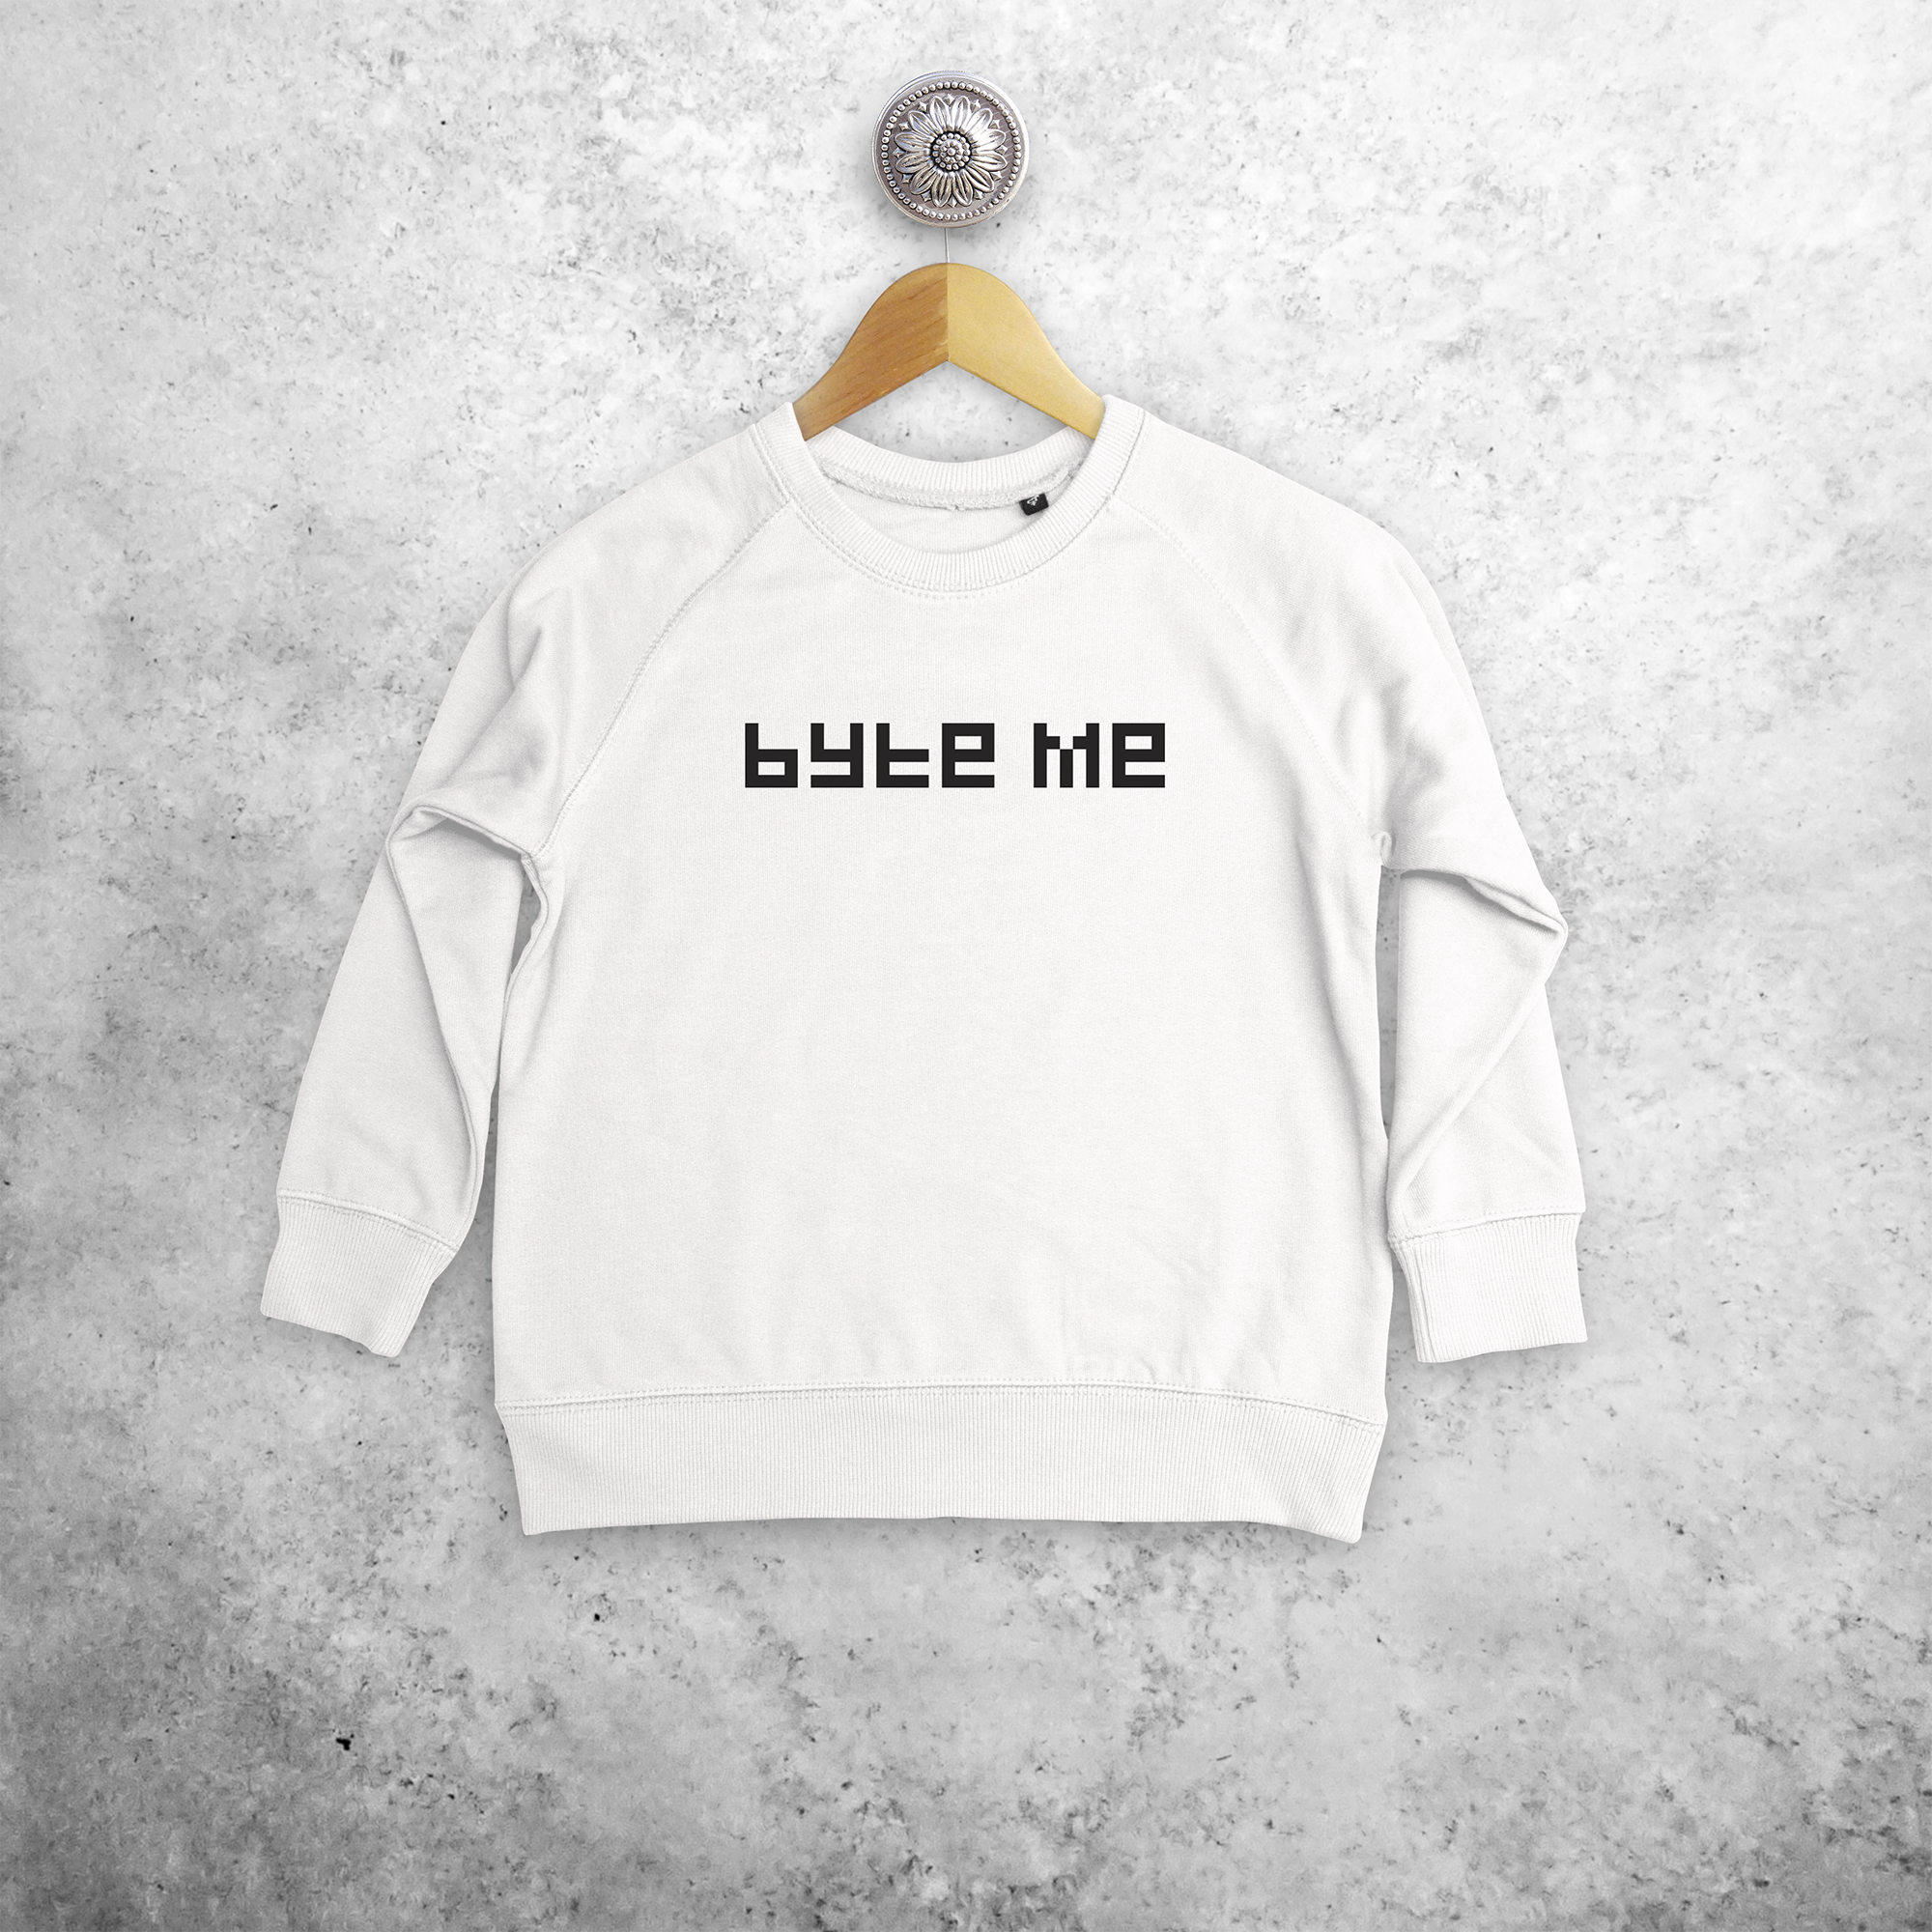 'Byte me' kids sweater